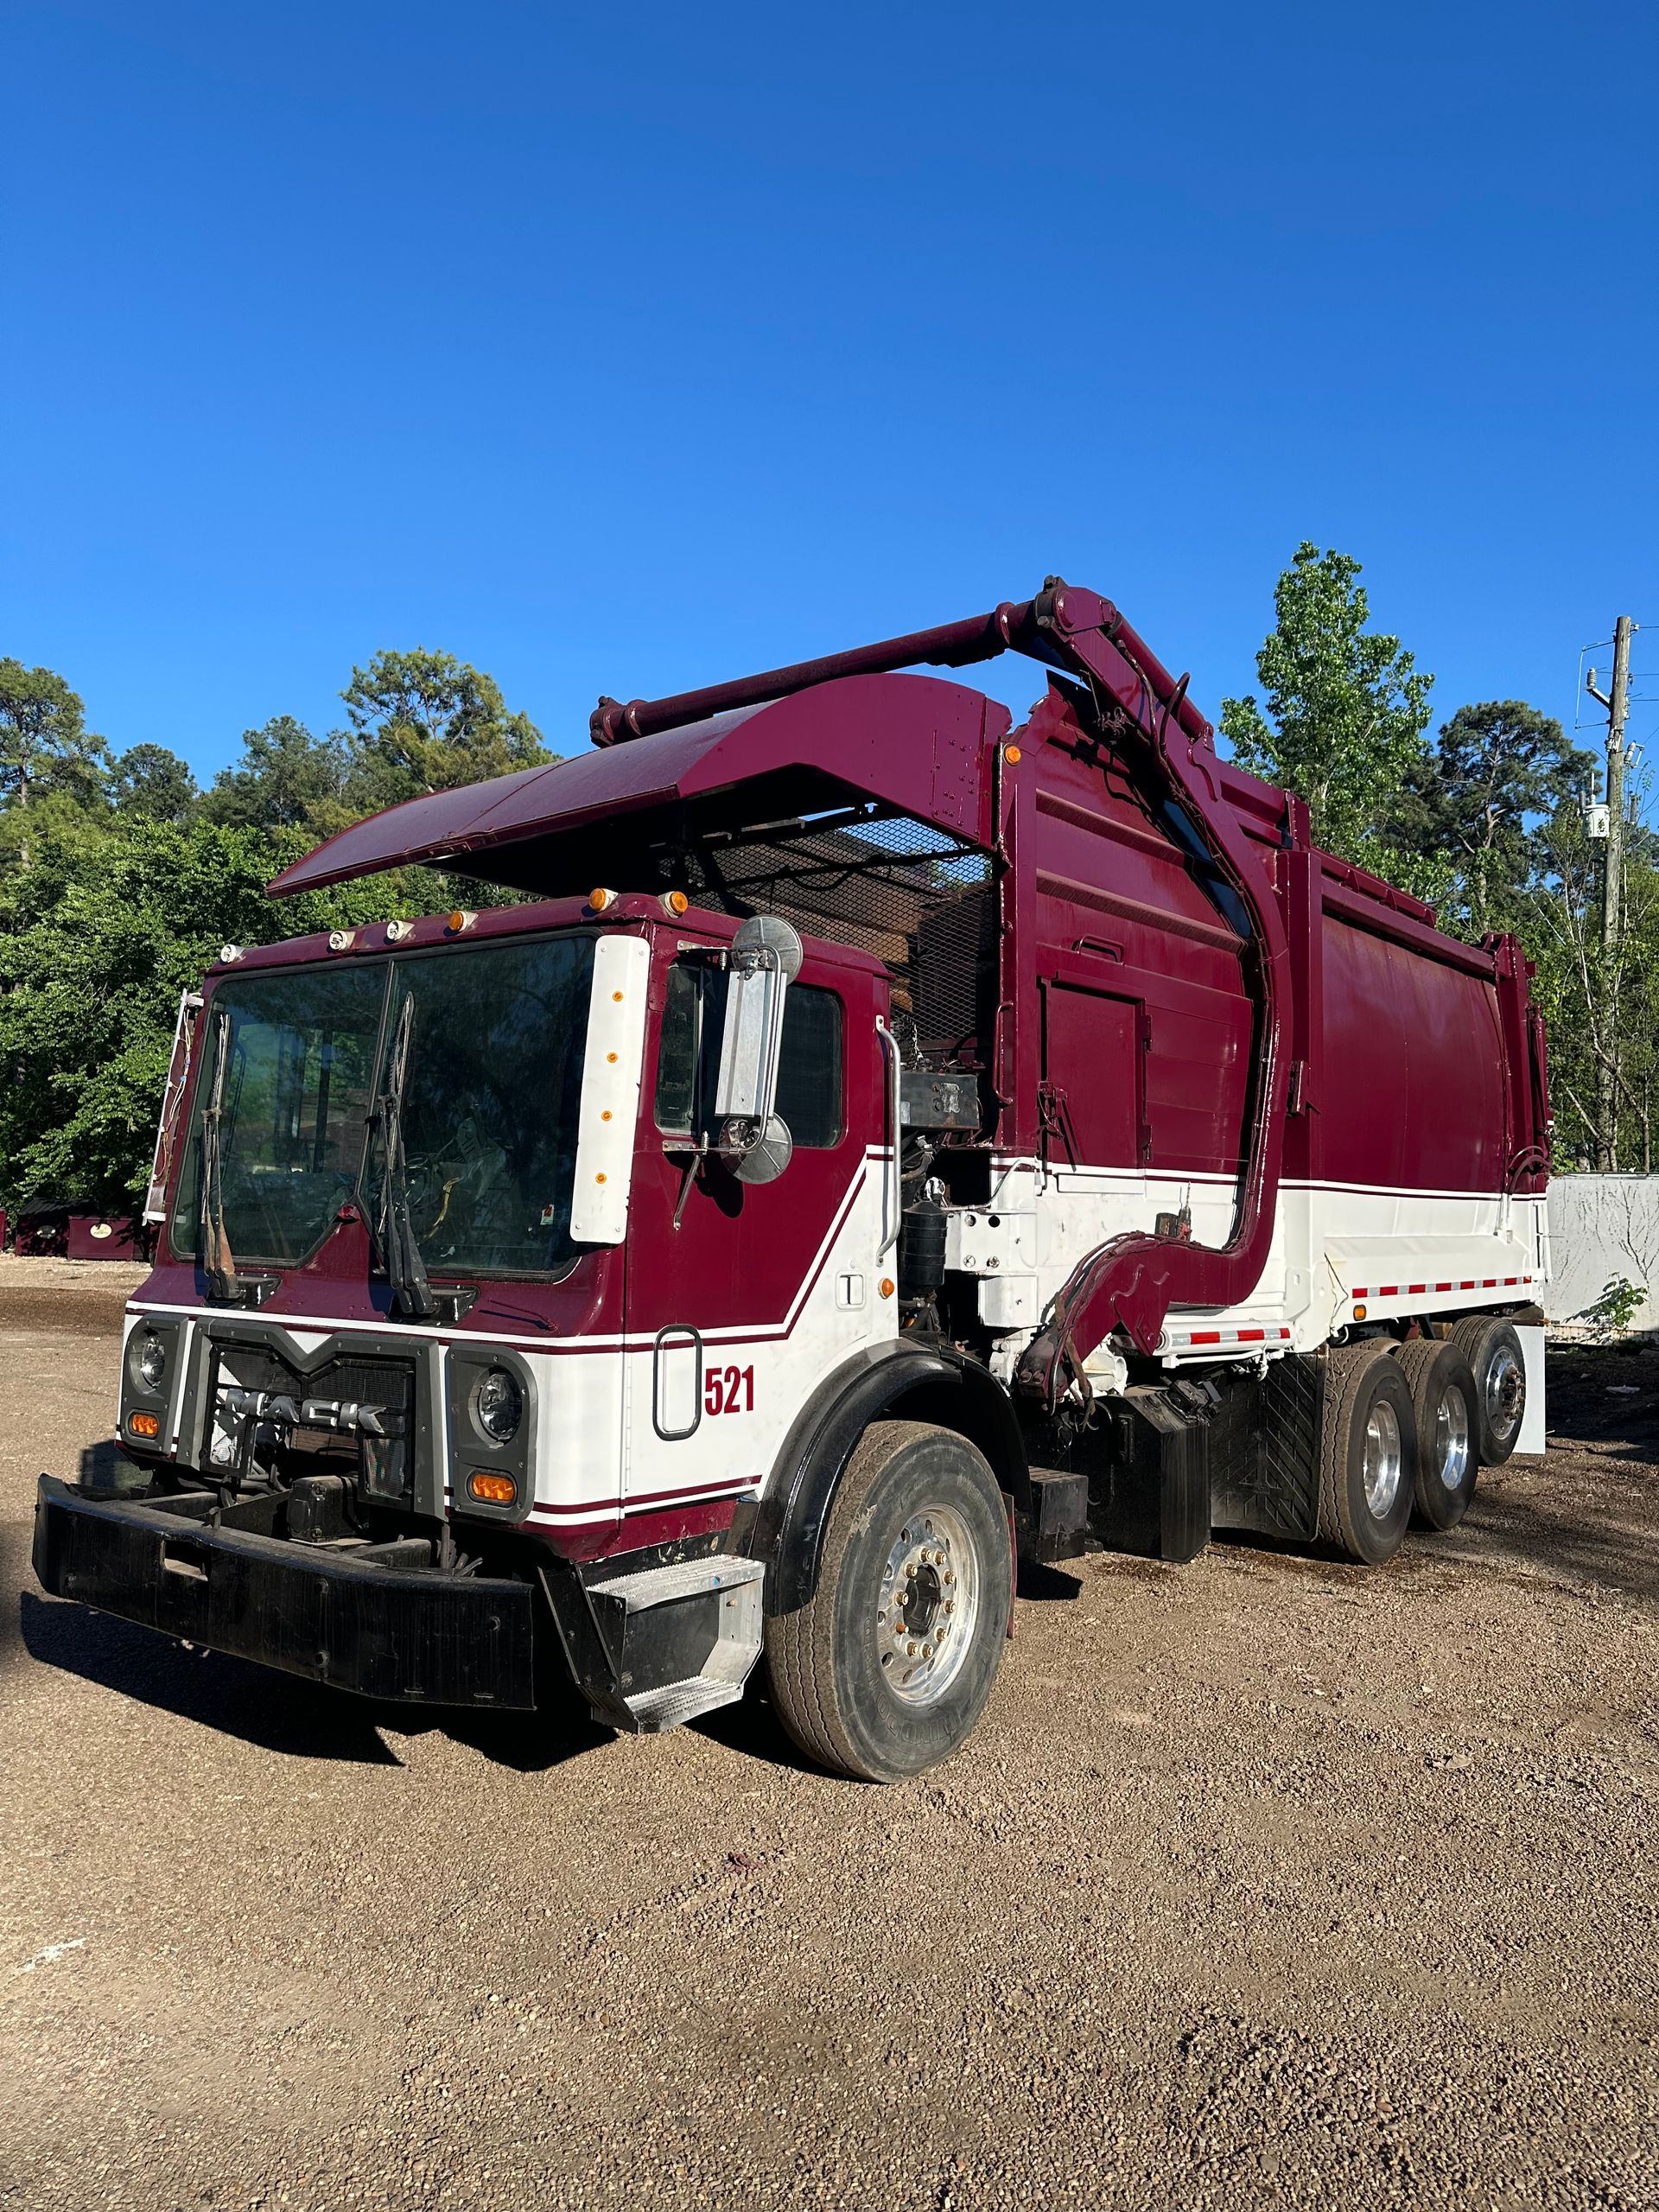 Dumpster Pick Up Truck — Dumpster Rentals in Houston, TX